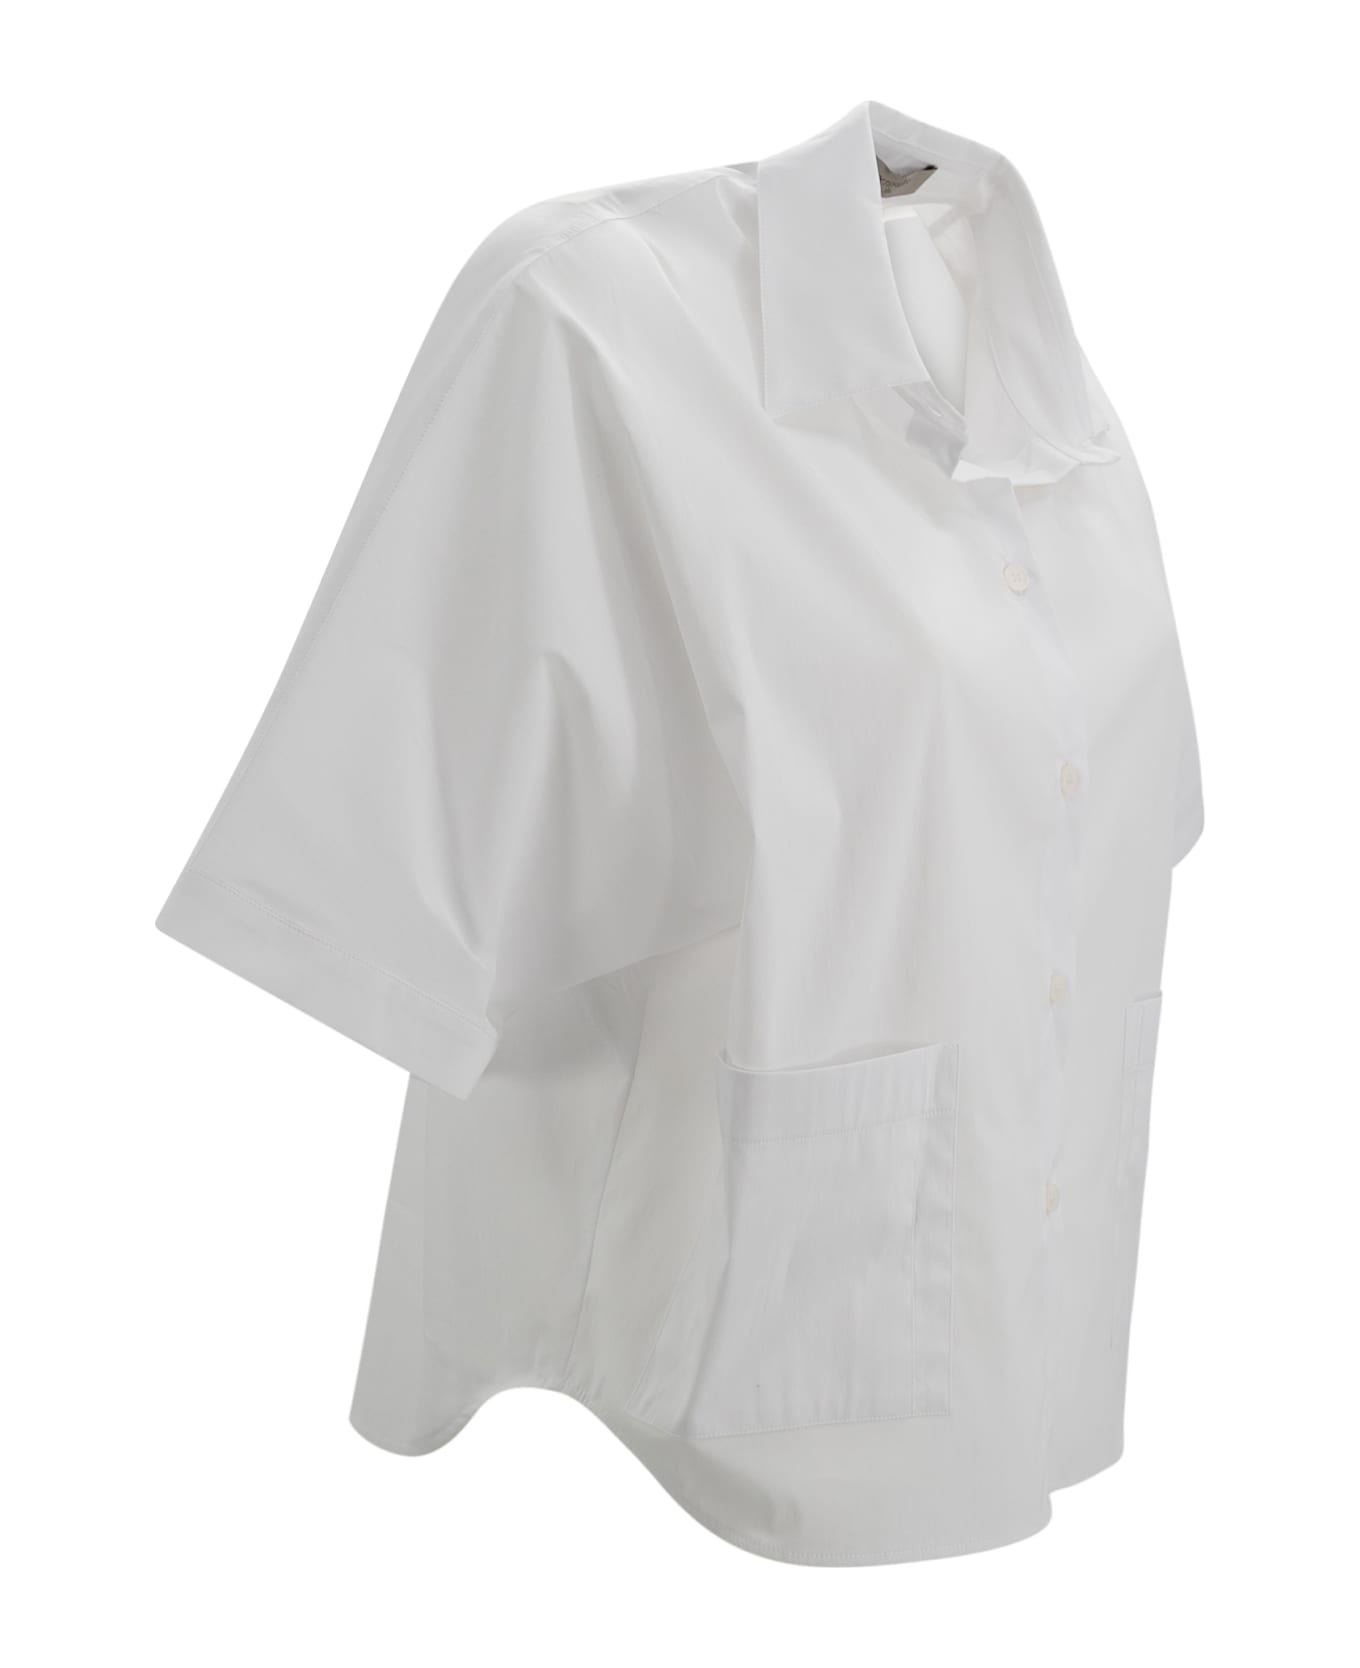 D.Exterior Short Shirt With Pocket - White